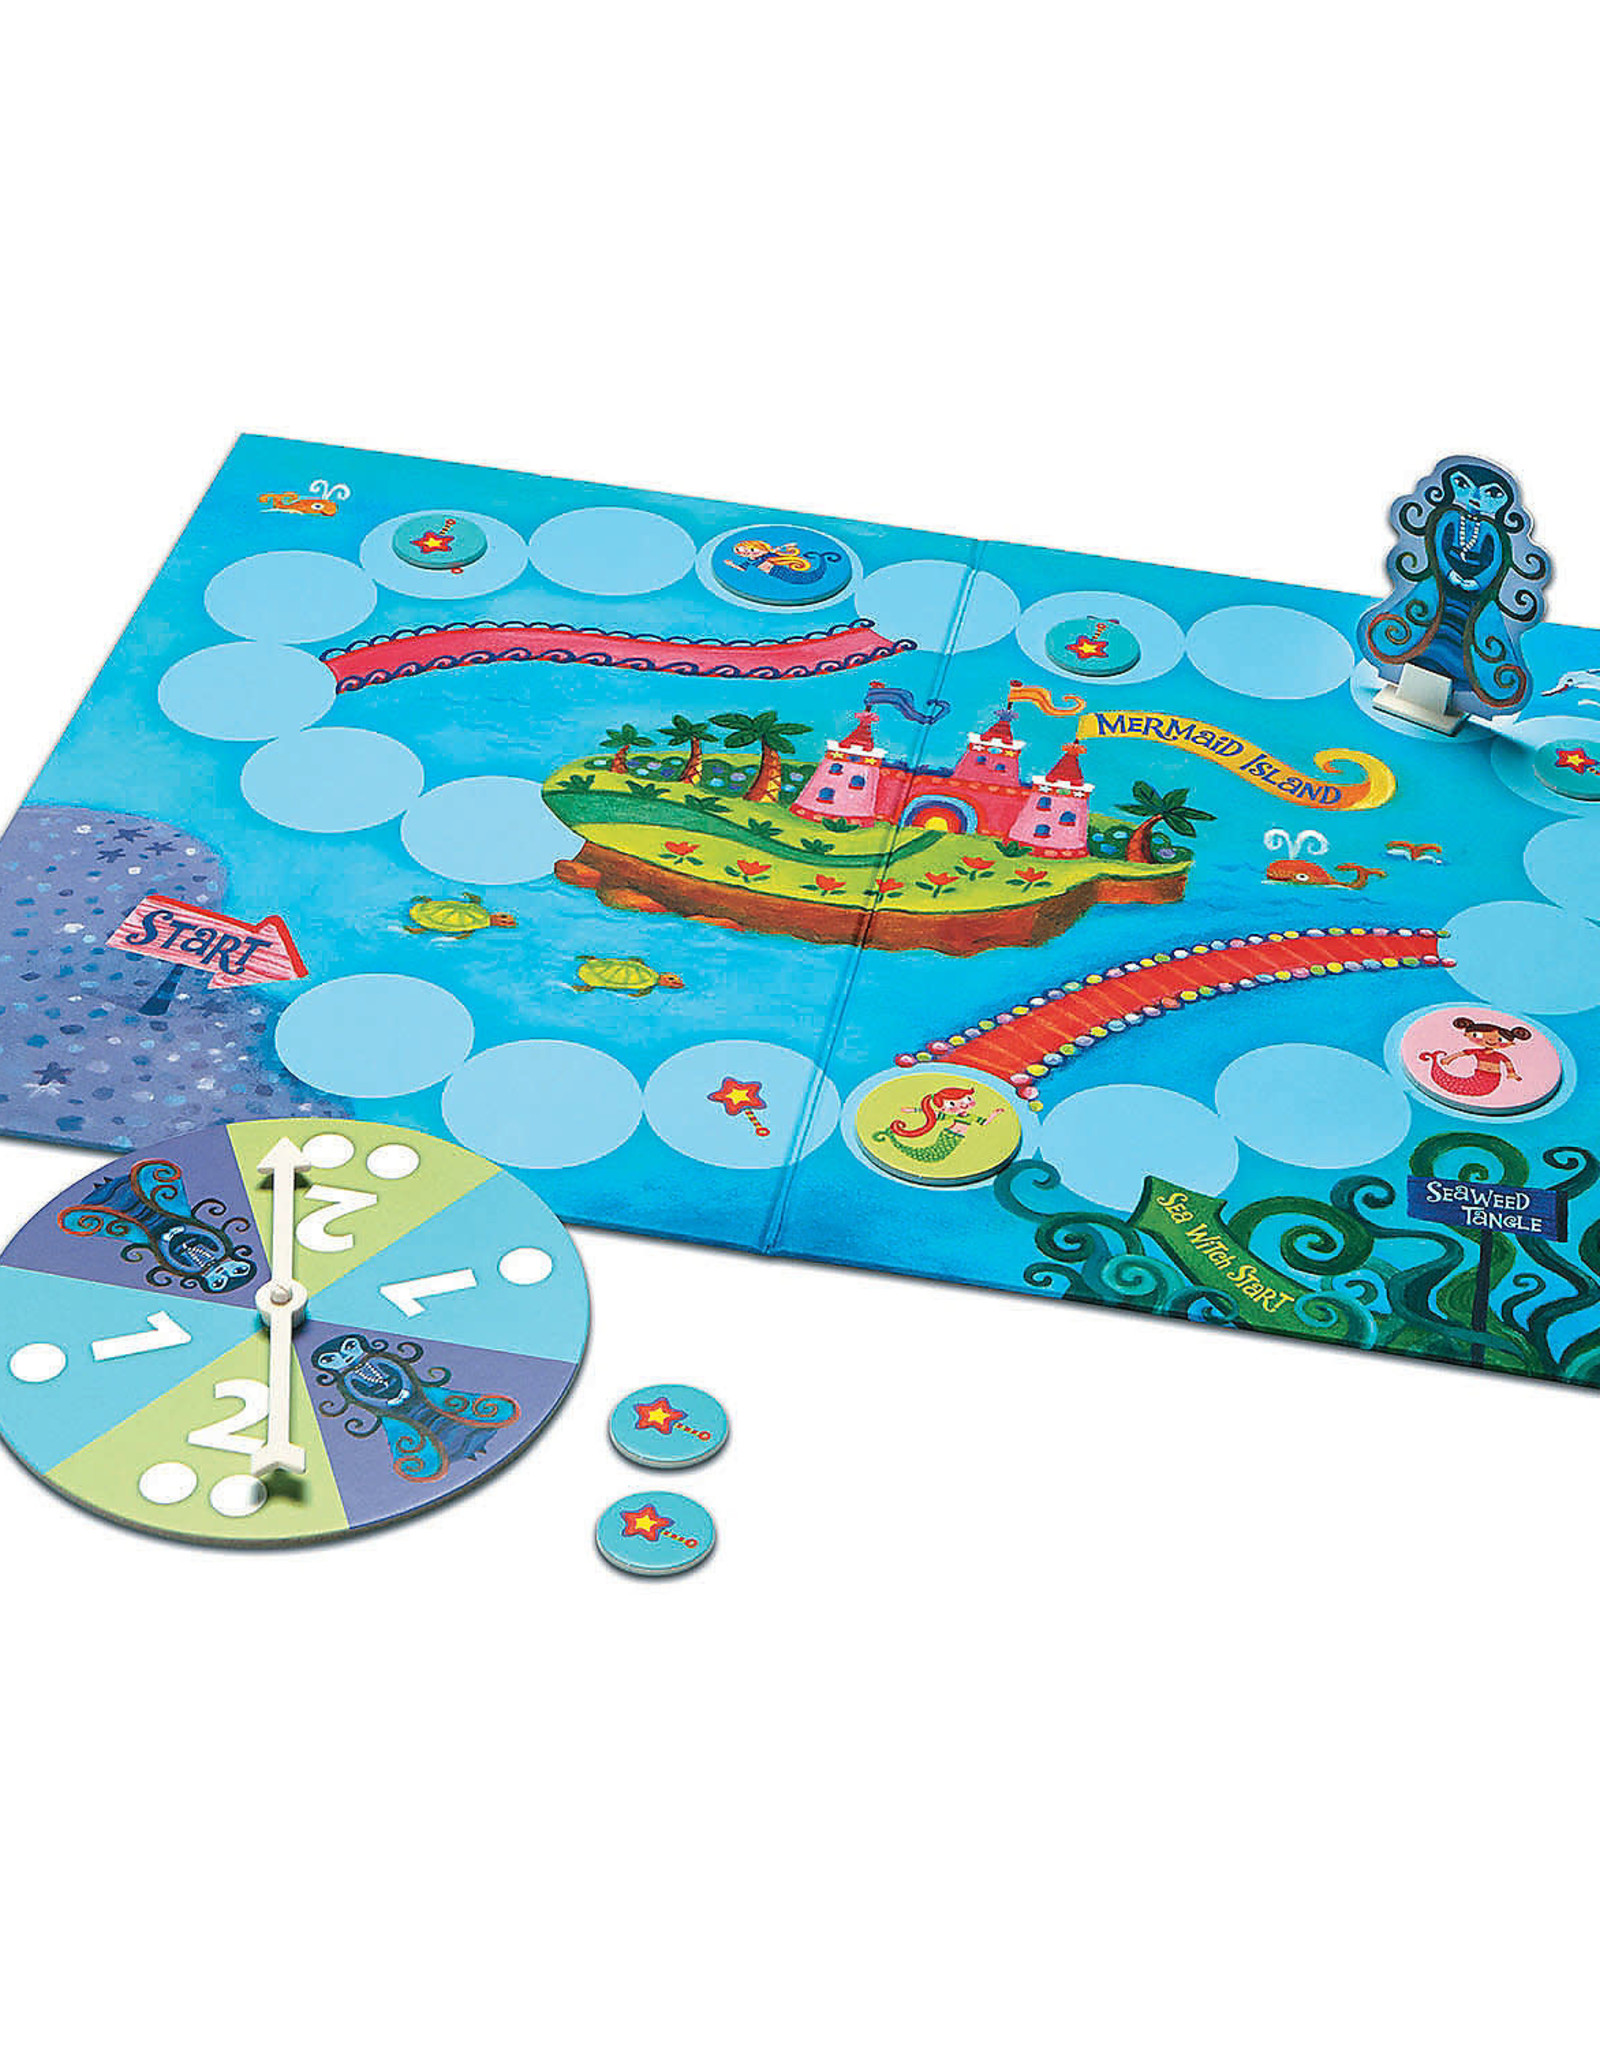 Mermaid Island COOPERATIVE GAME